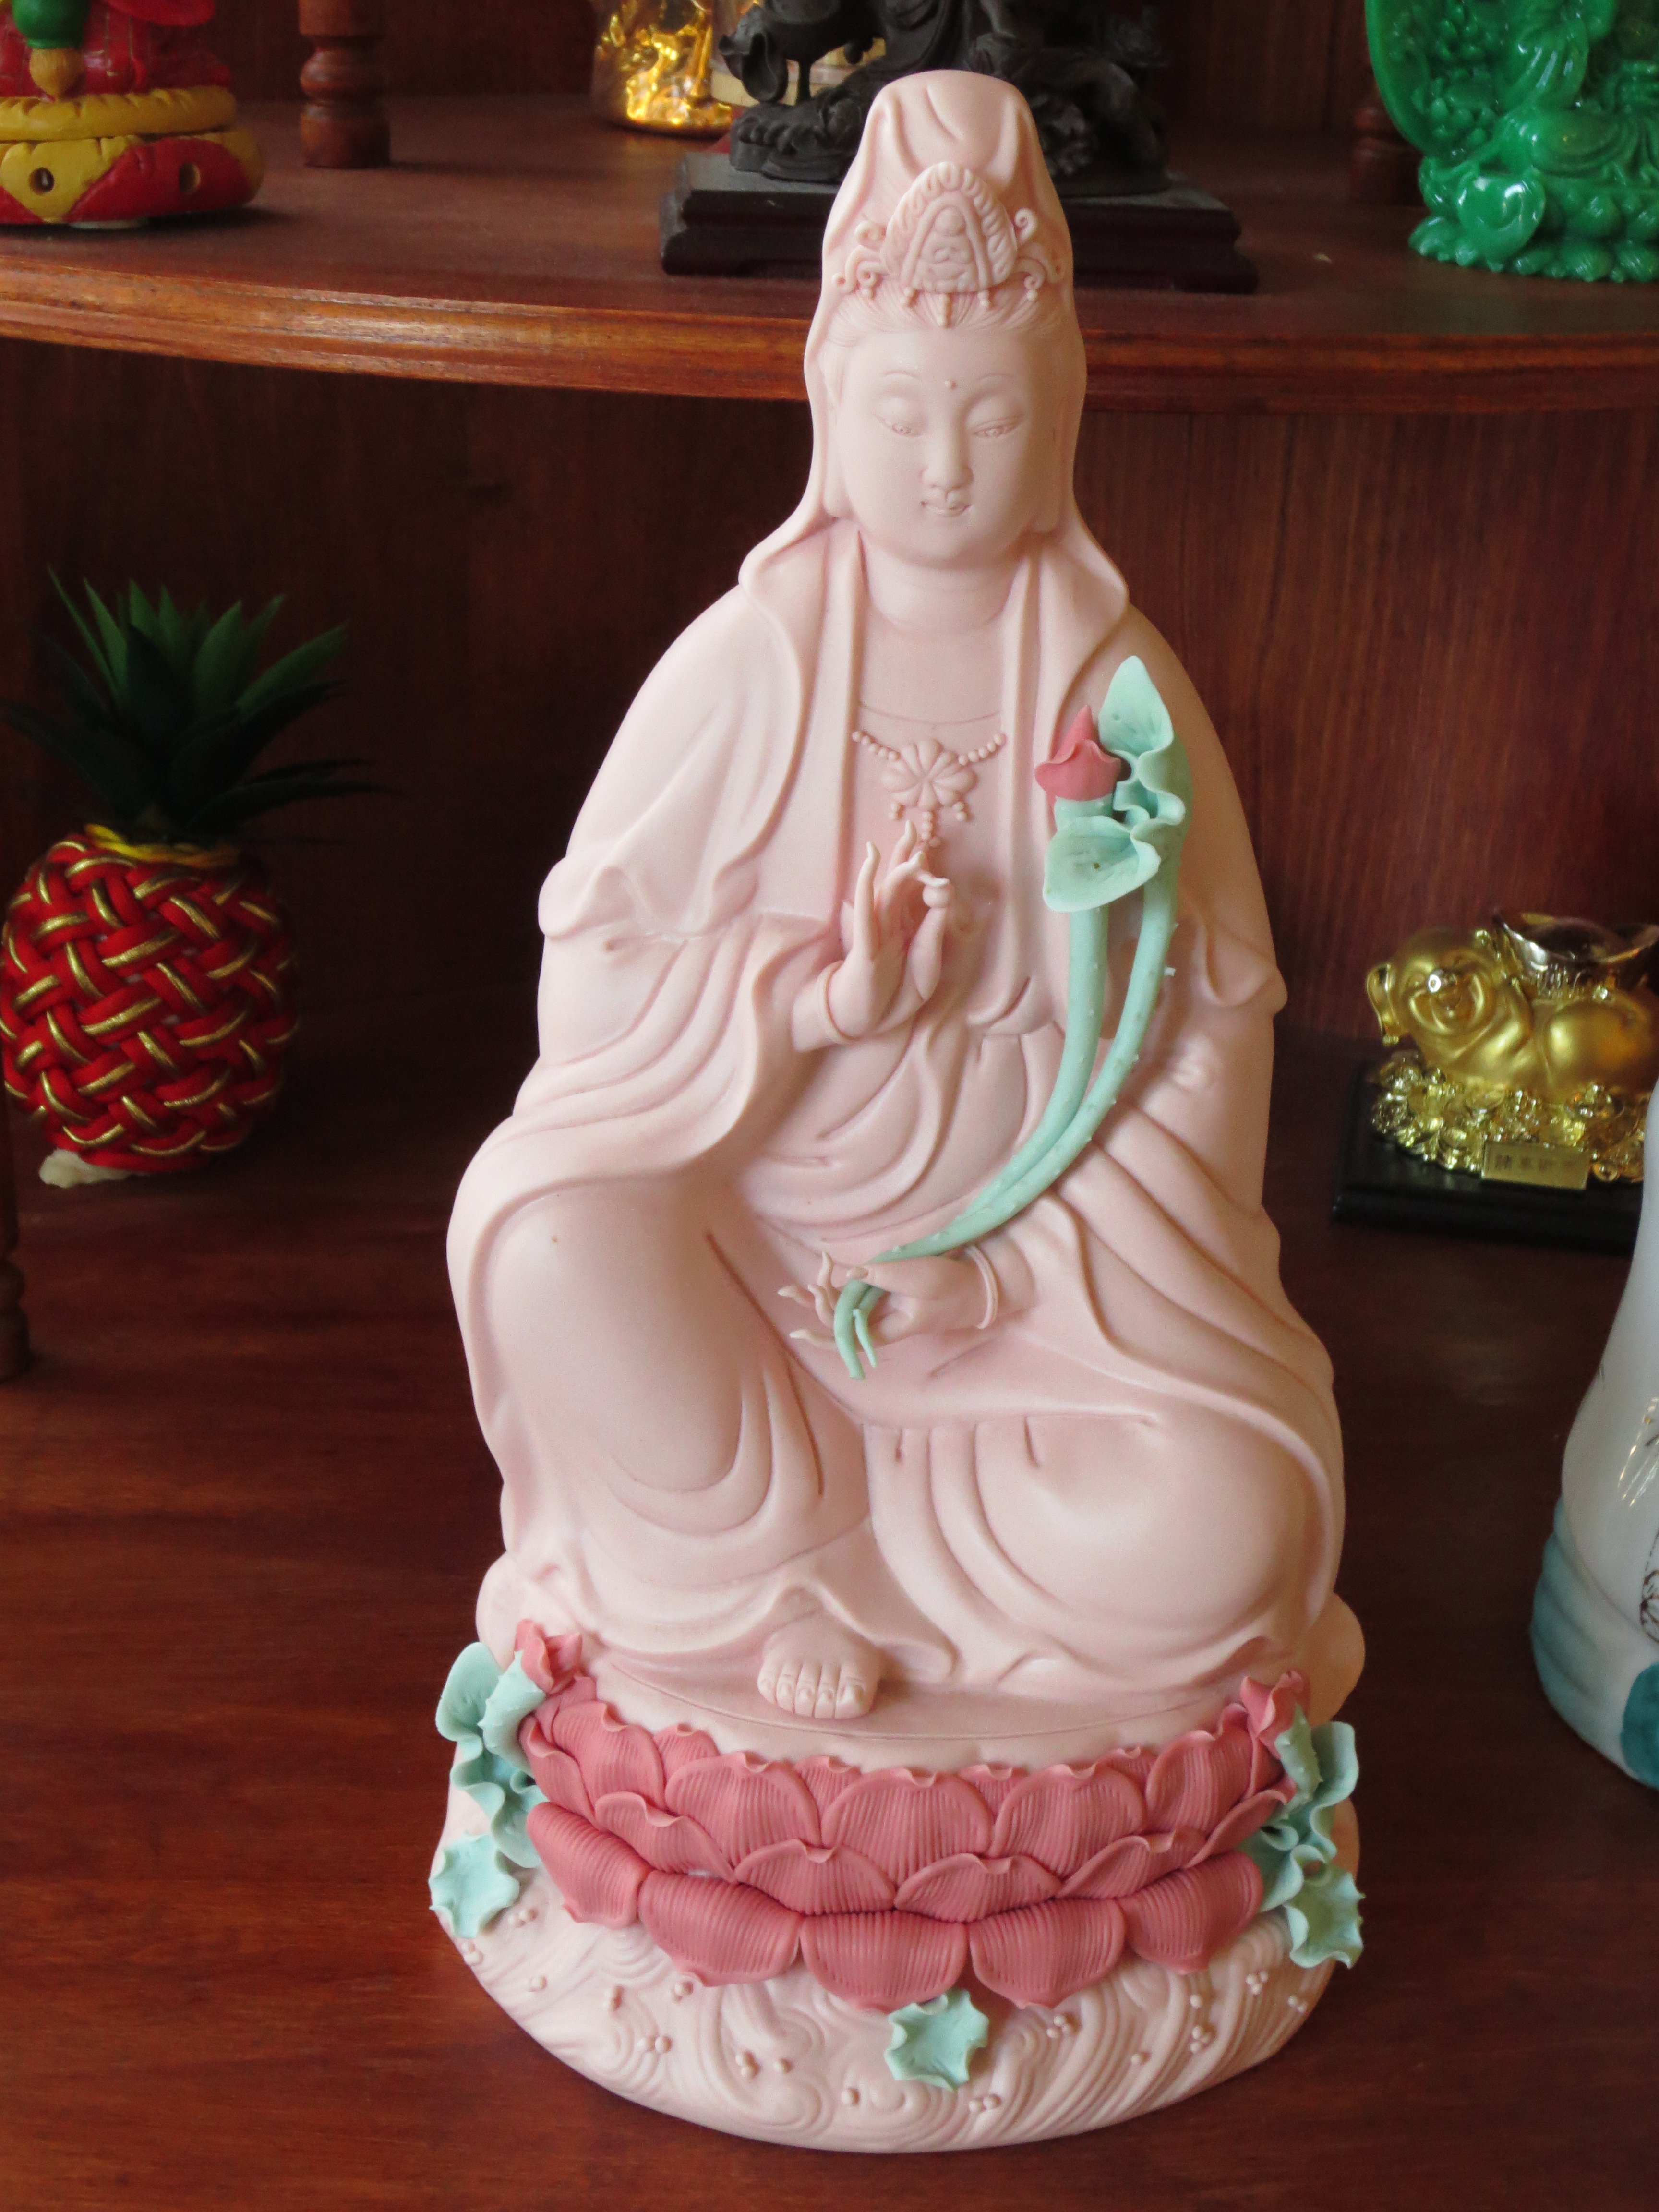 At BLIA, a statue of Quan Yin (Avalokitesvara on Sanskrit), a Buddha of Compassion